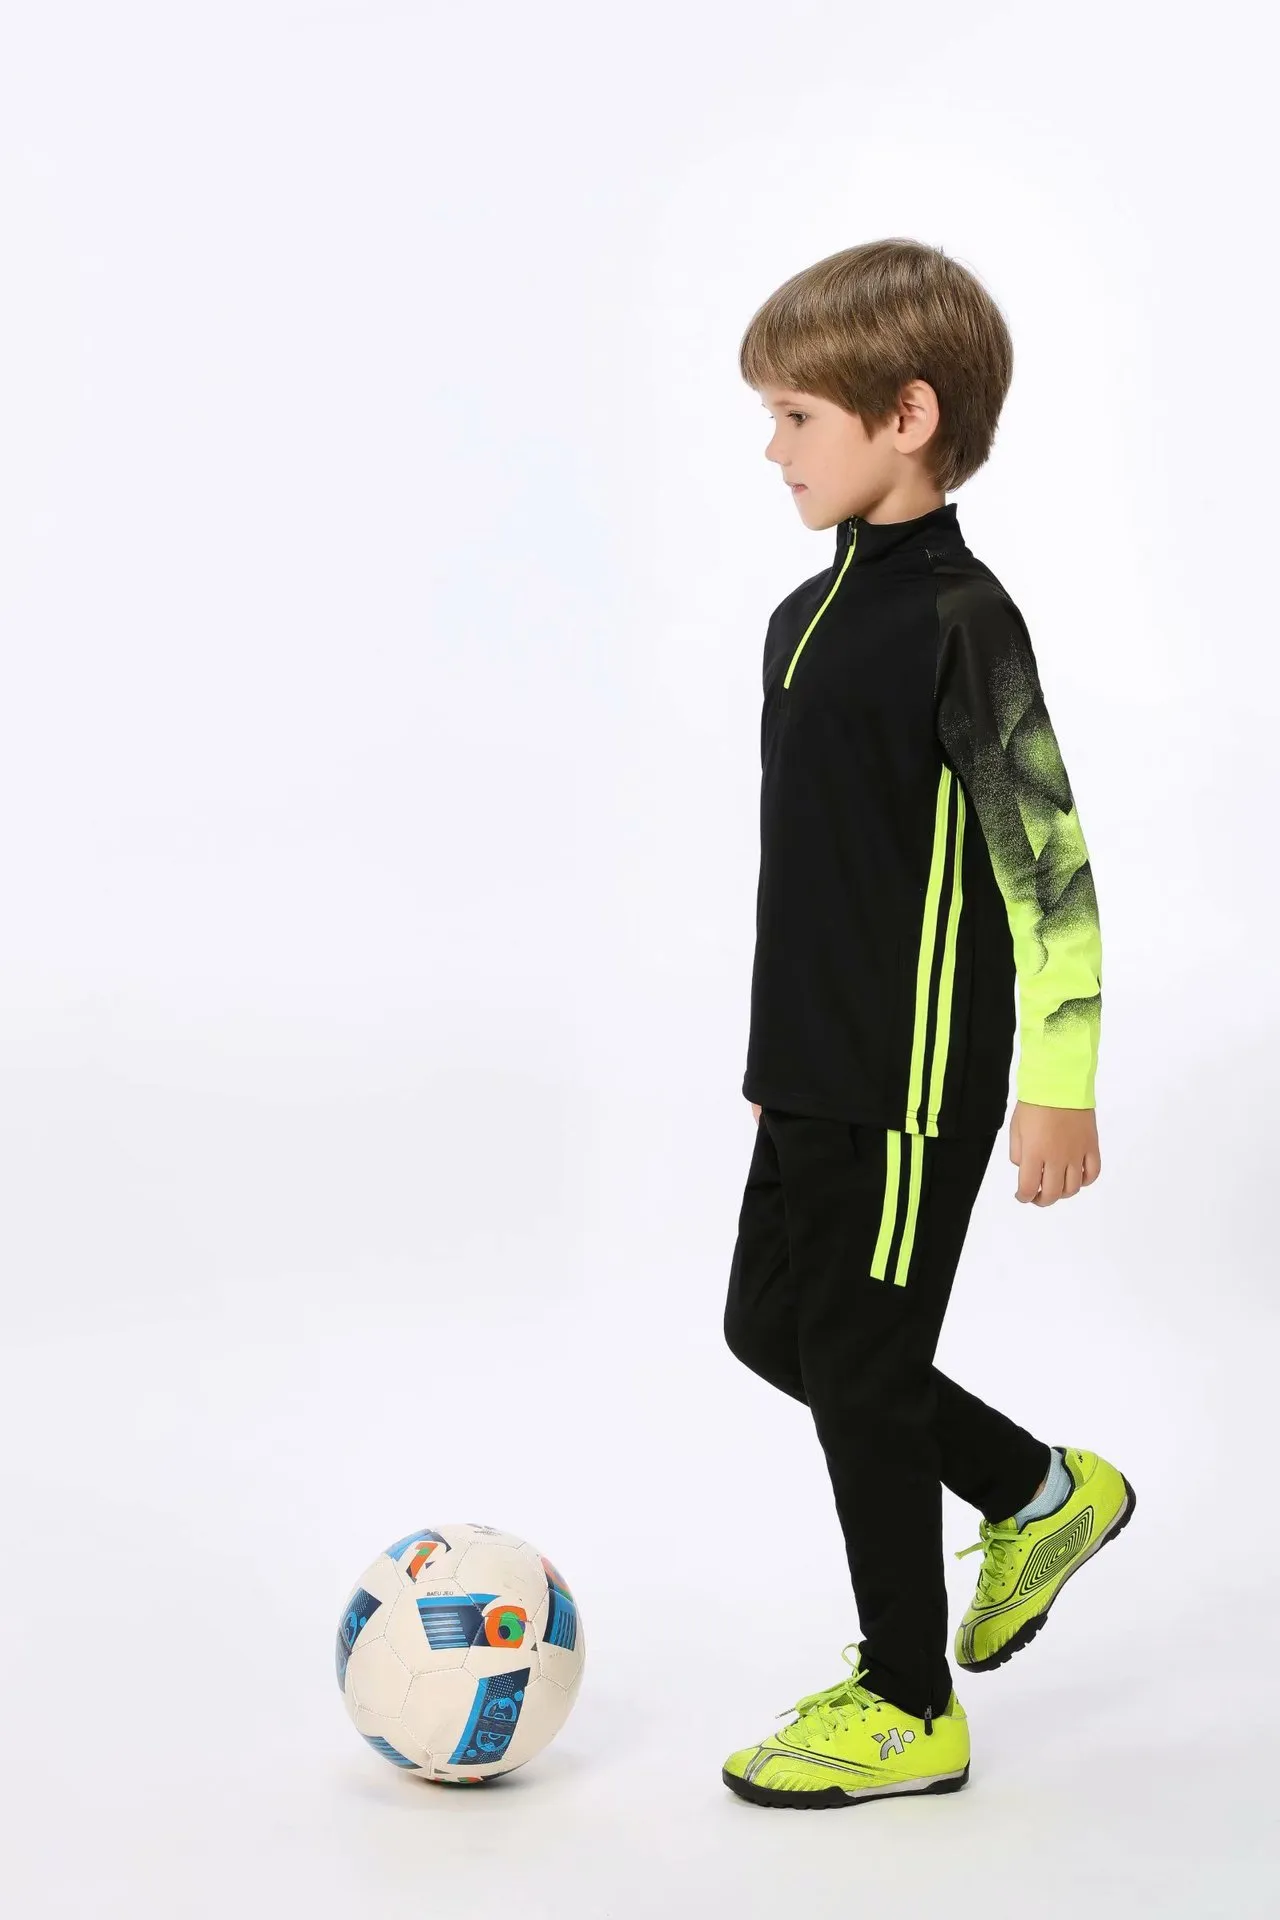 Jessie chutes #JD52 Triple S Design 2021 Moda Jerseys Crianças Crianças Ourtdoor Sport